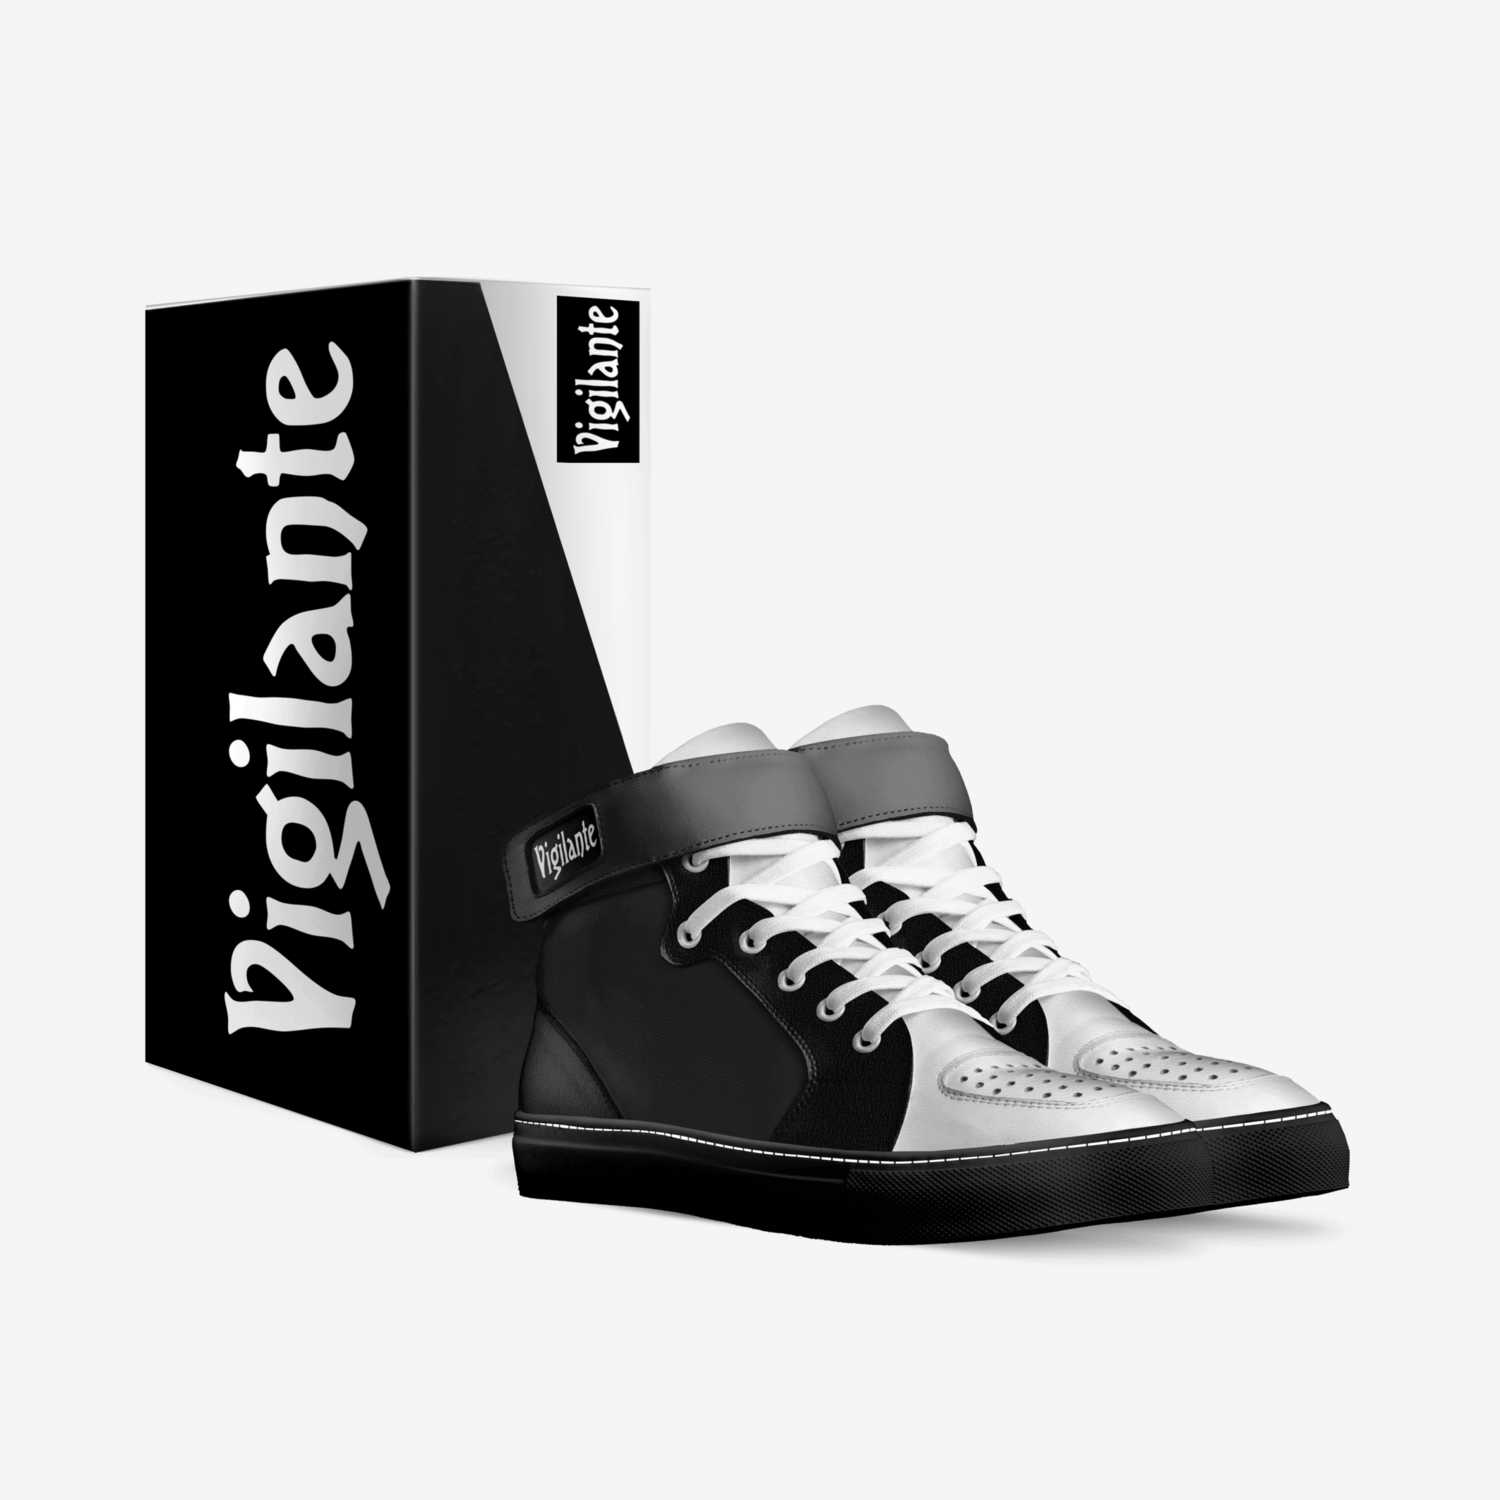 Vigilante 4 custom made in Italy shoes by Ryan Hardaway | Box view